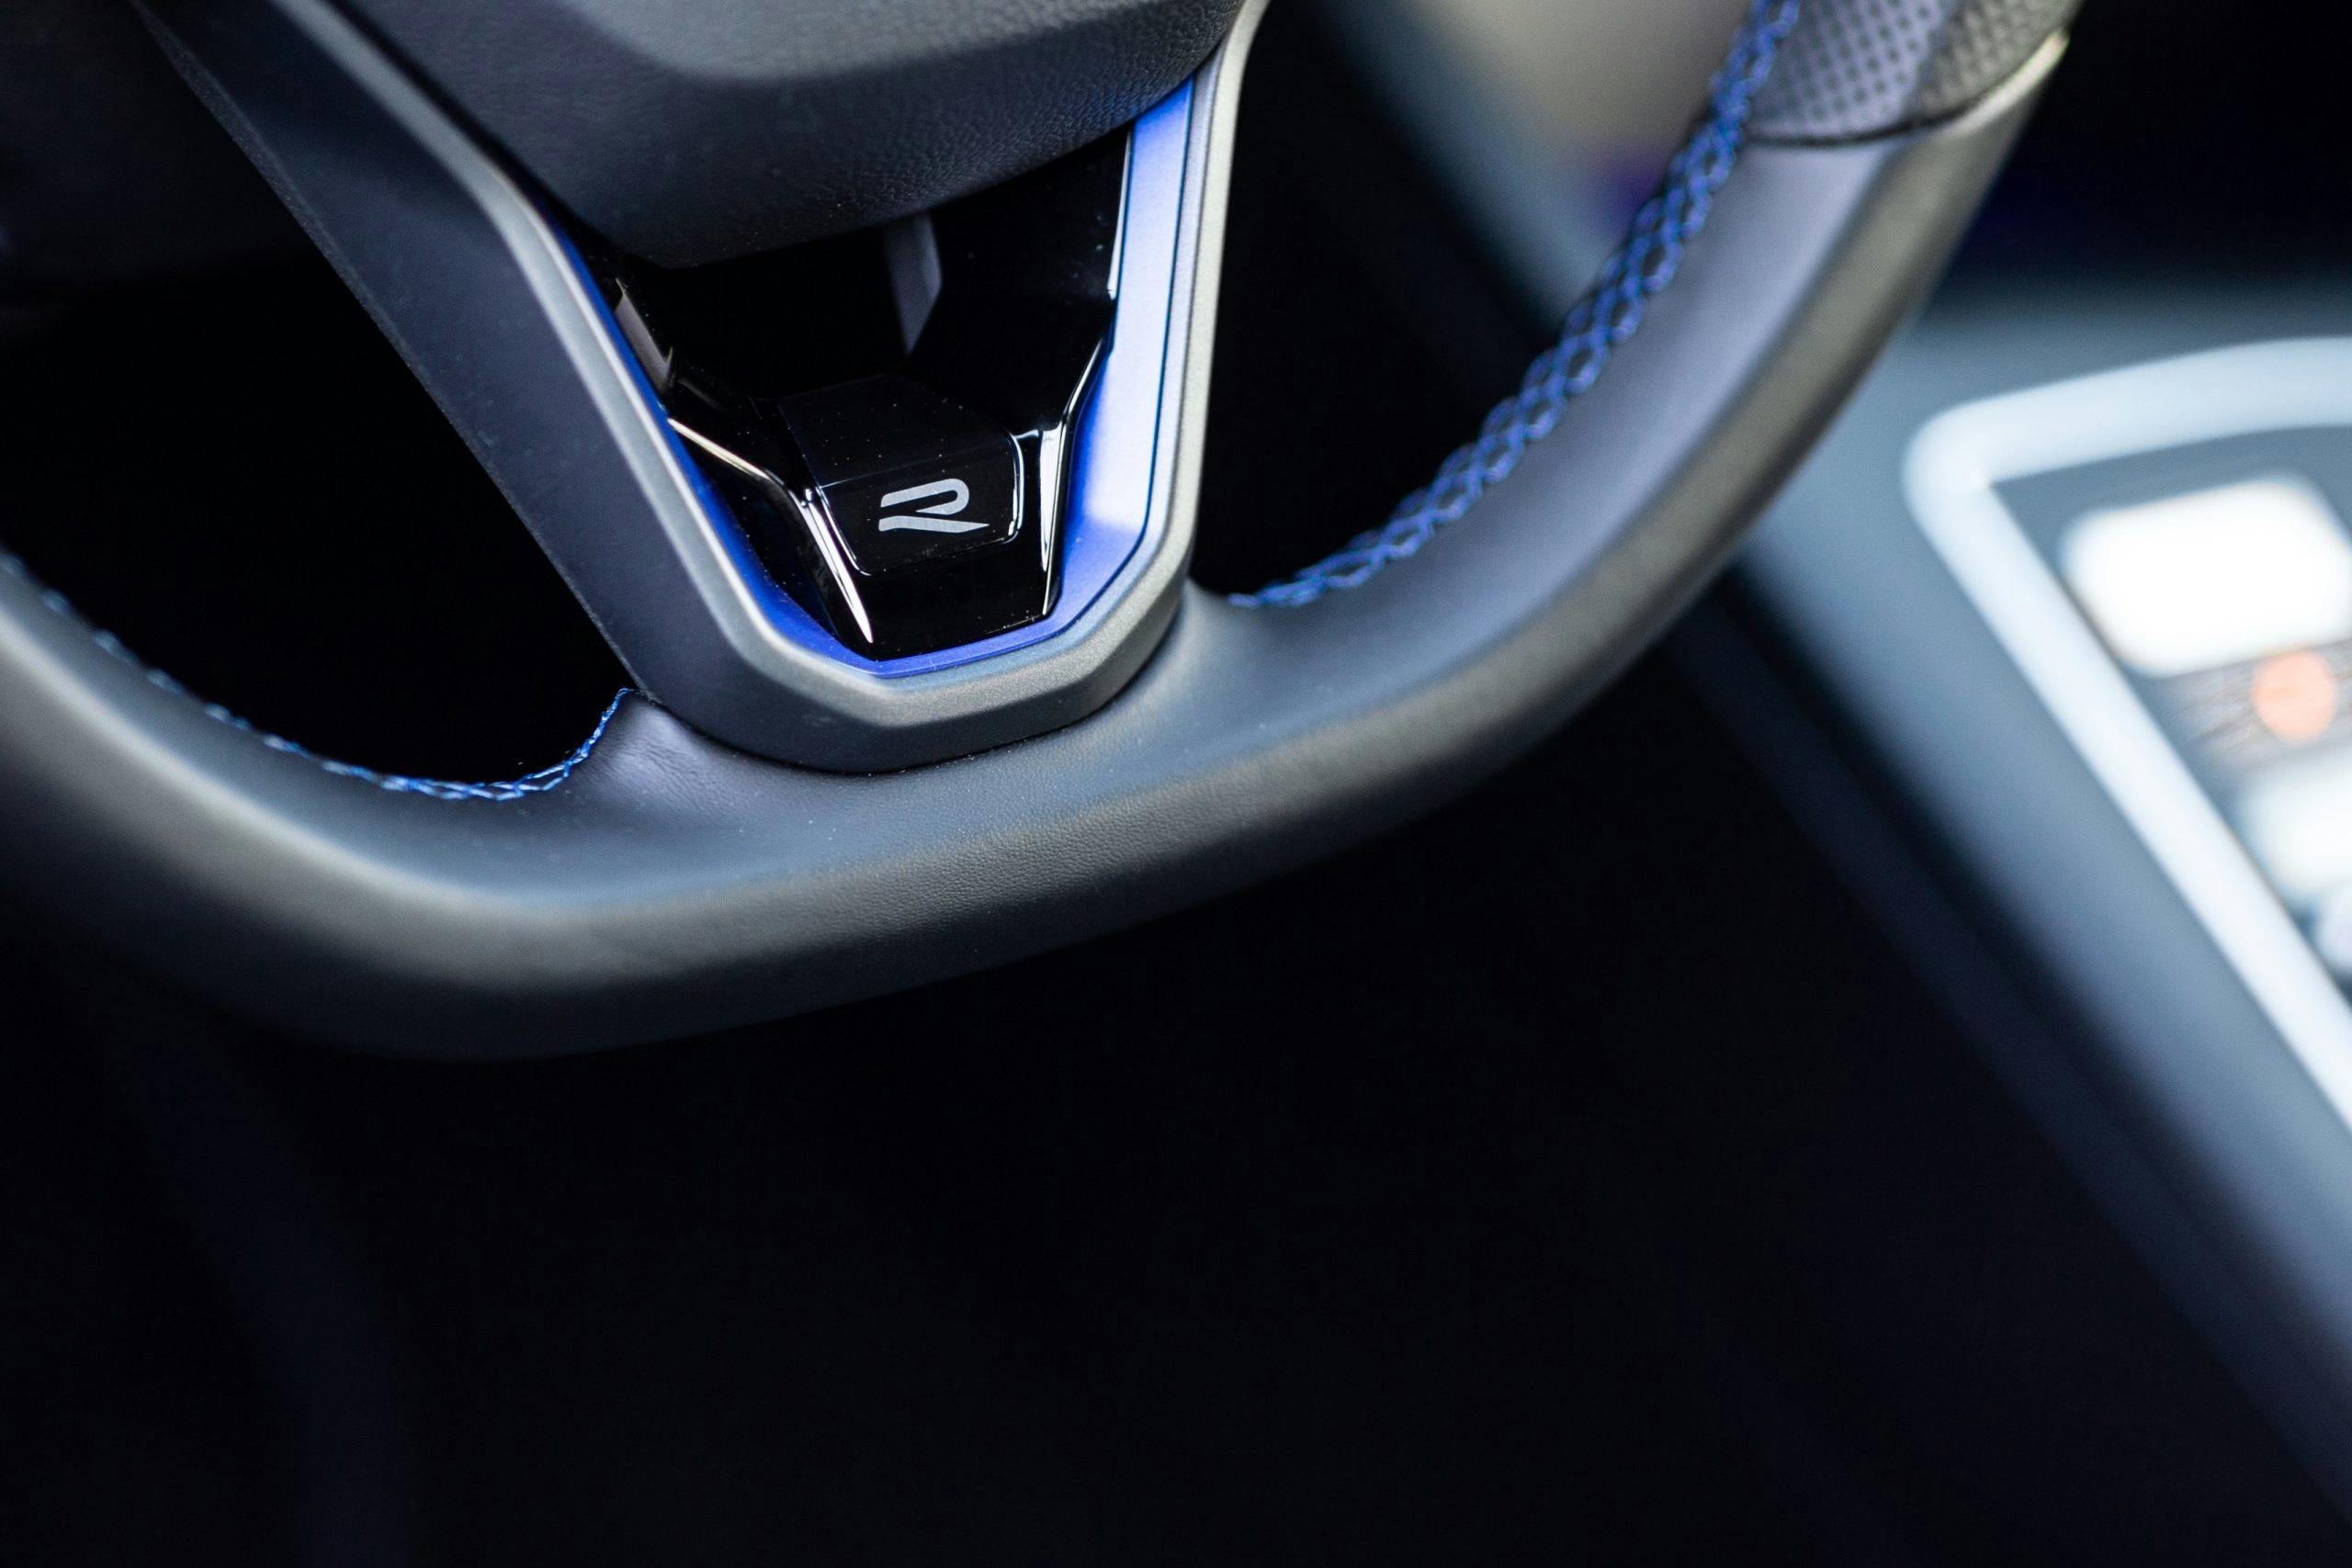 VW Golf R interior steering wheel detail